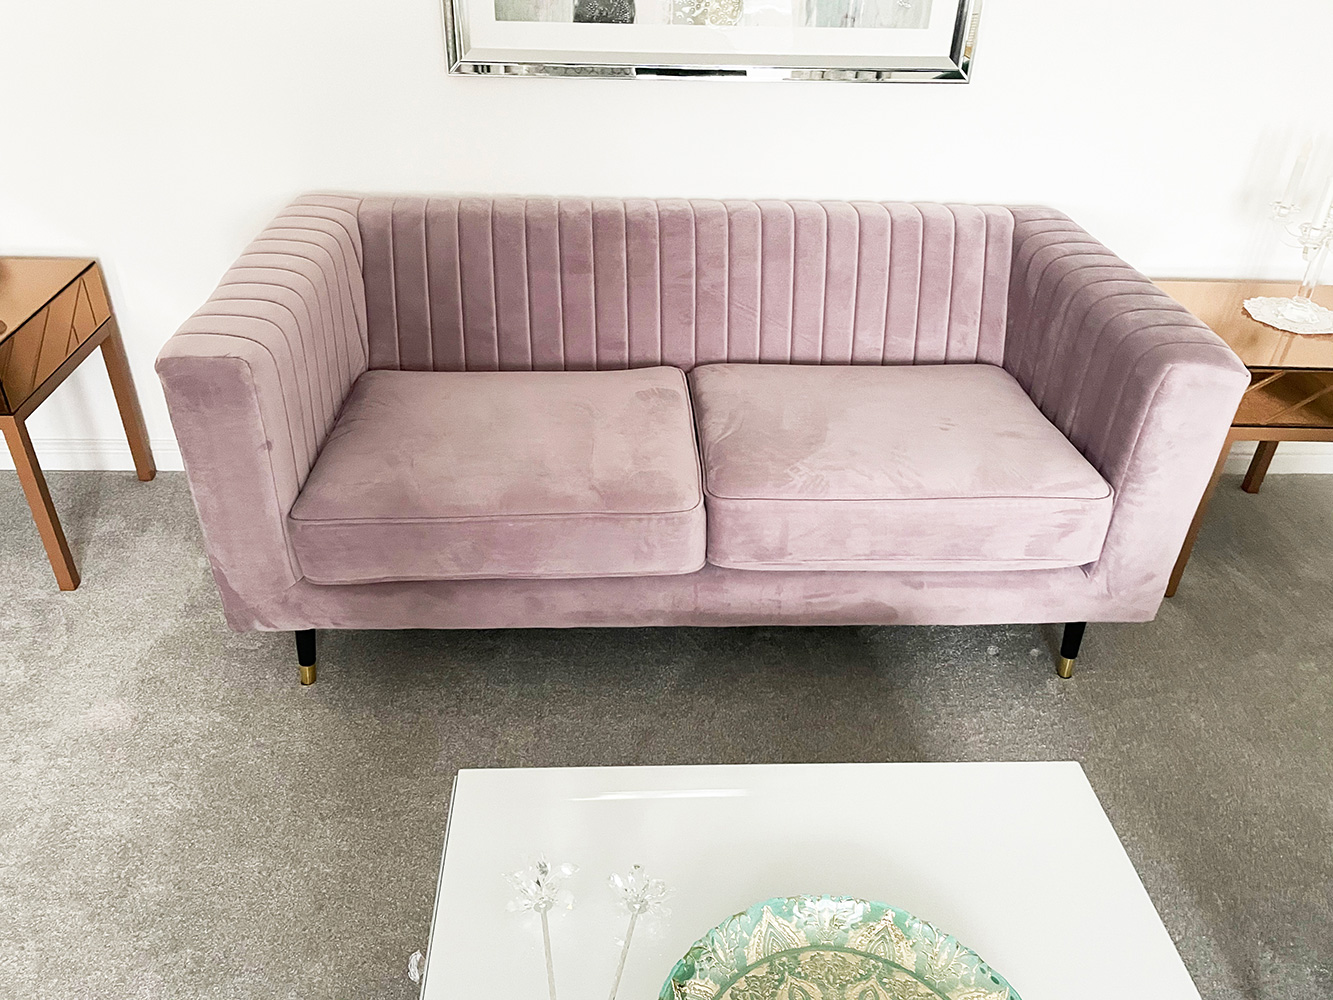 Slender sofa in powder pink in modern living room